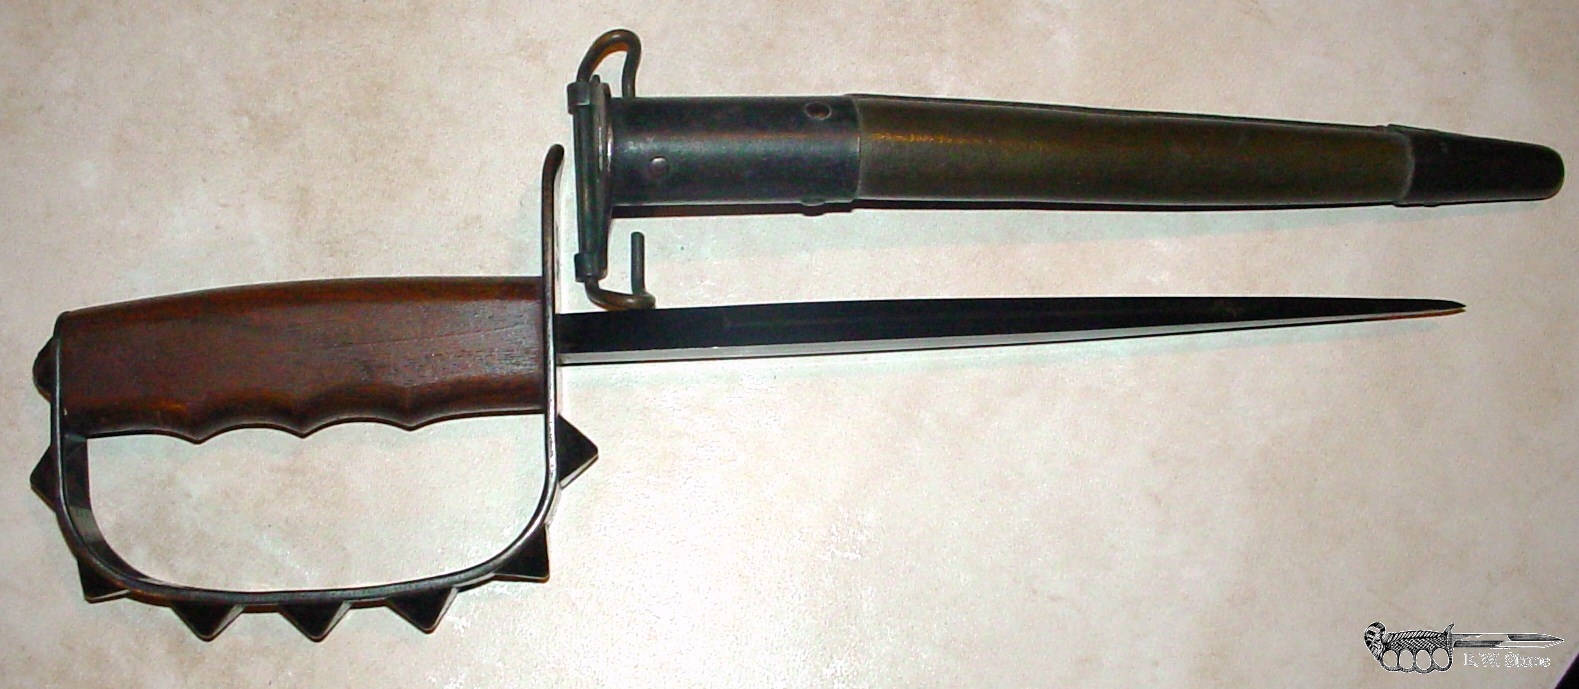 L. F. & C. U. S. Model 1917-1918 Trench Knife with Extra Knob